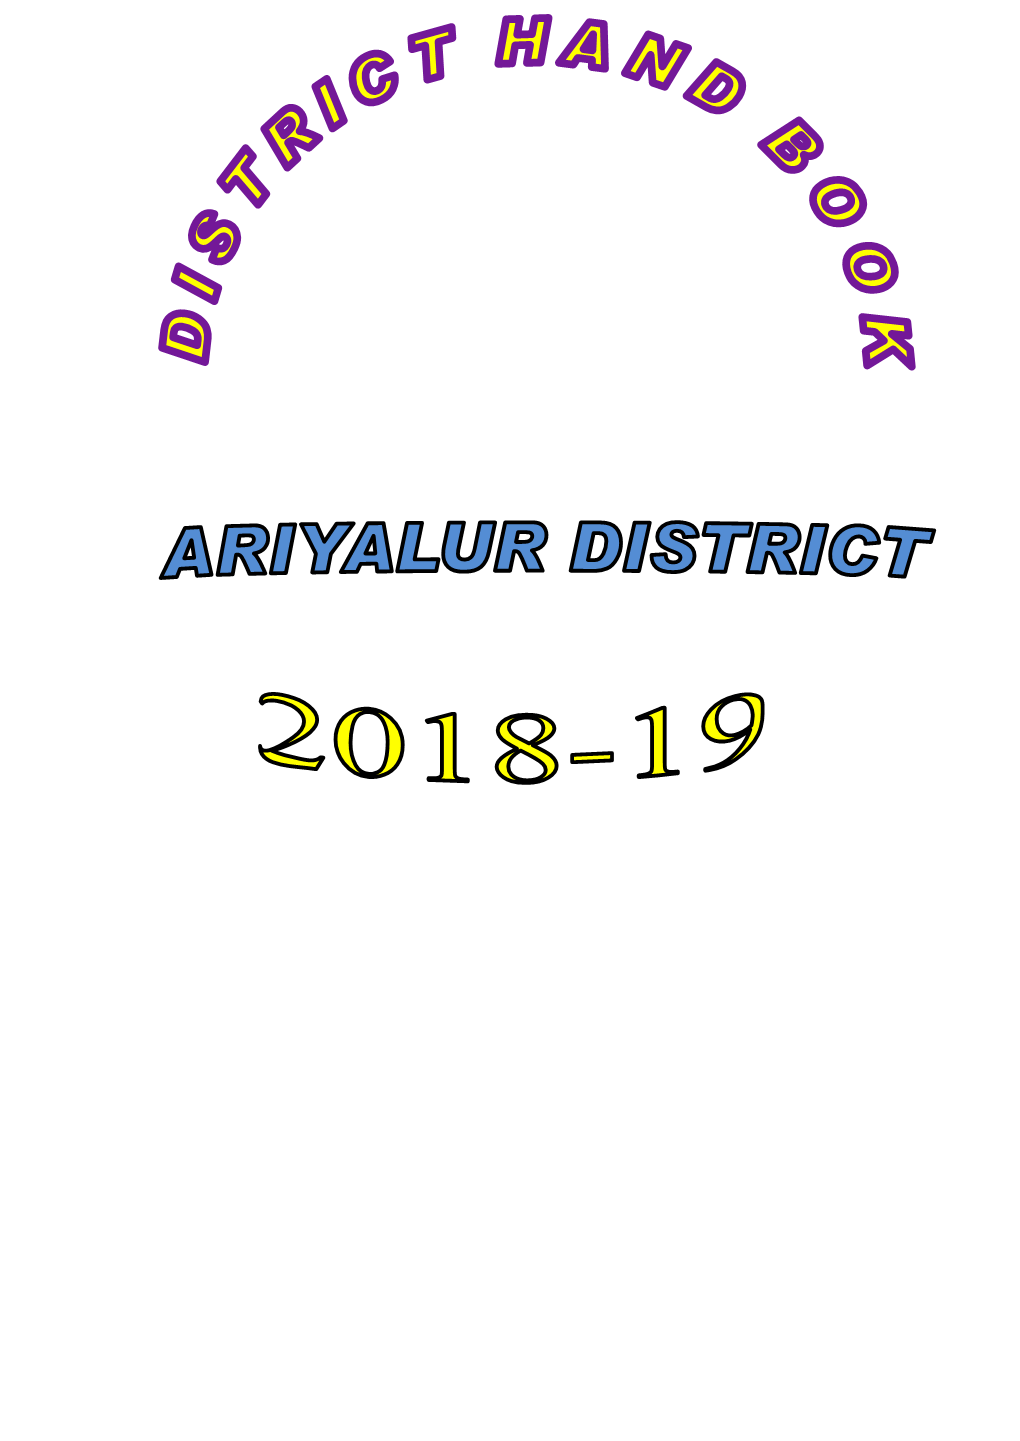 Ariyalur District - an Outline